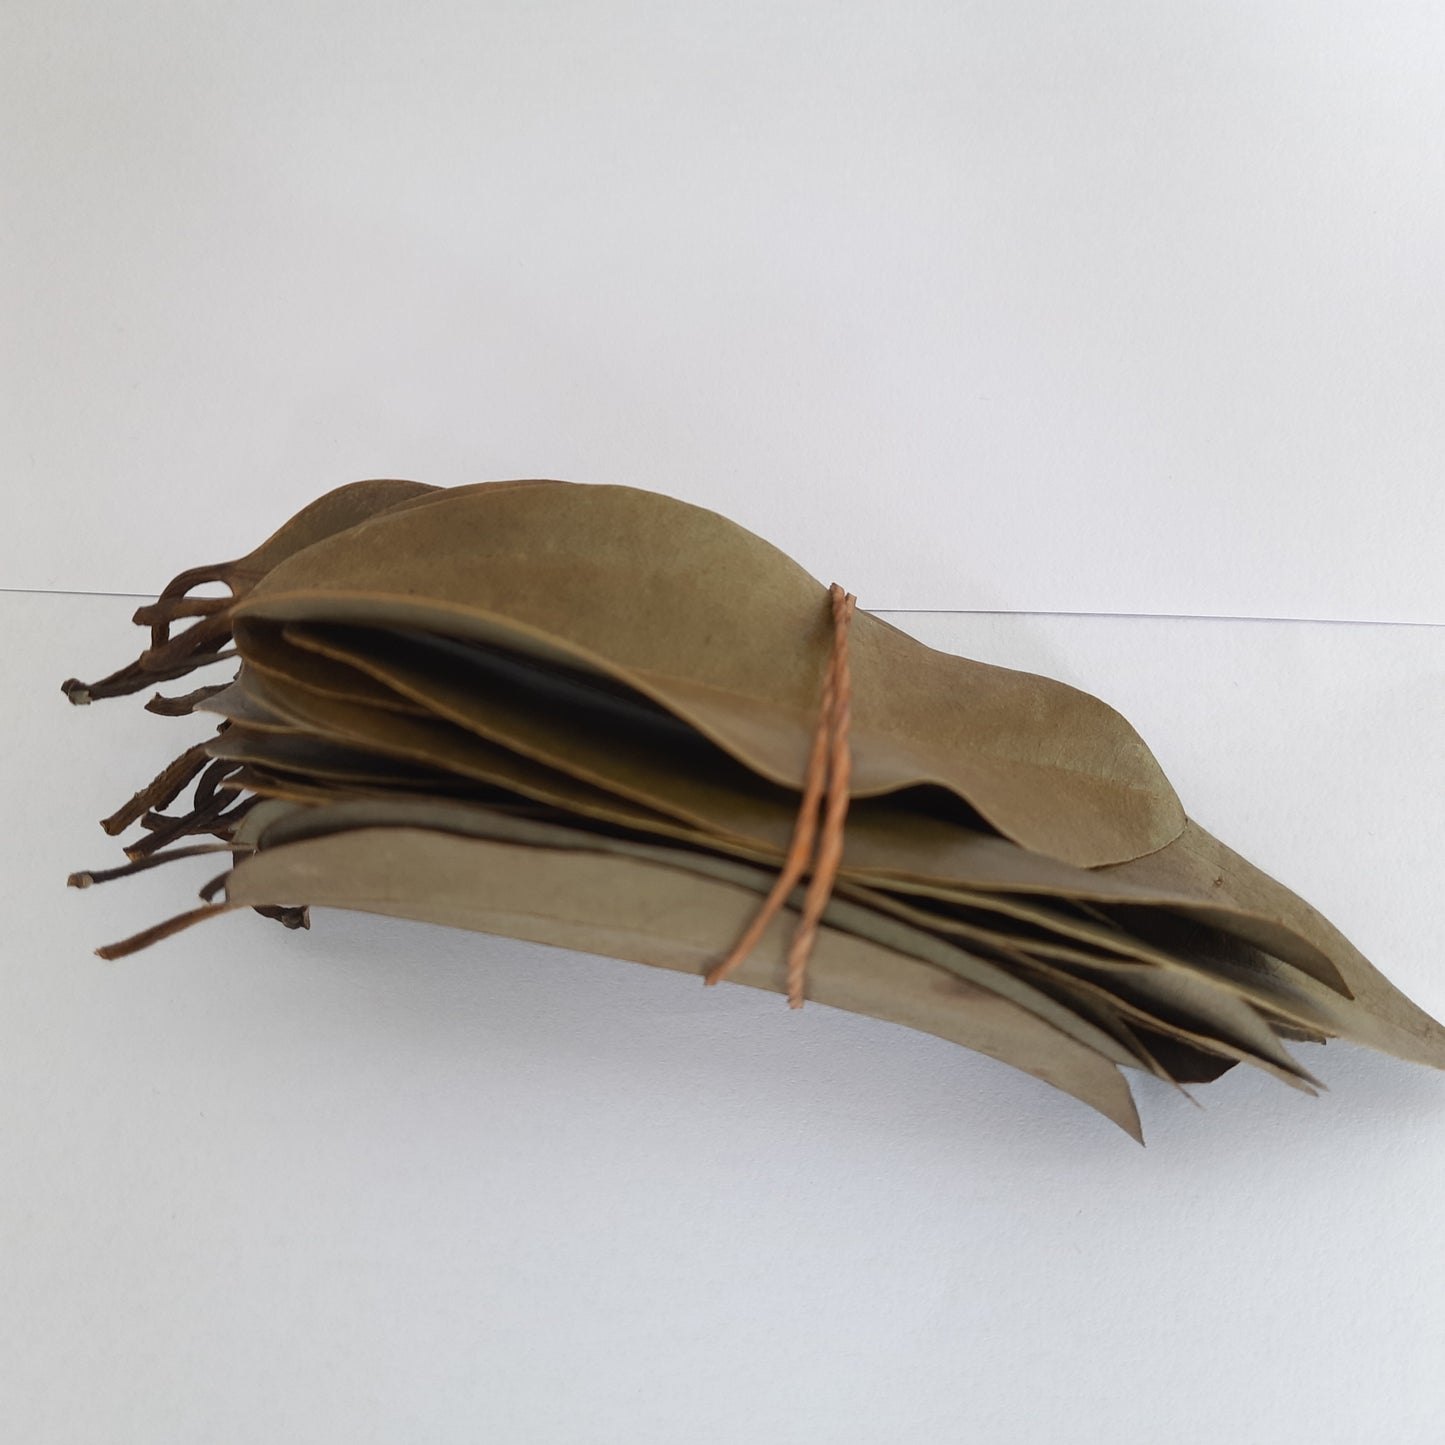 Dried Cinnamon Leaves 100% Organic Natural Leaf | Ceylon Herbs